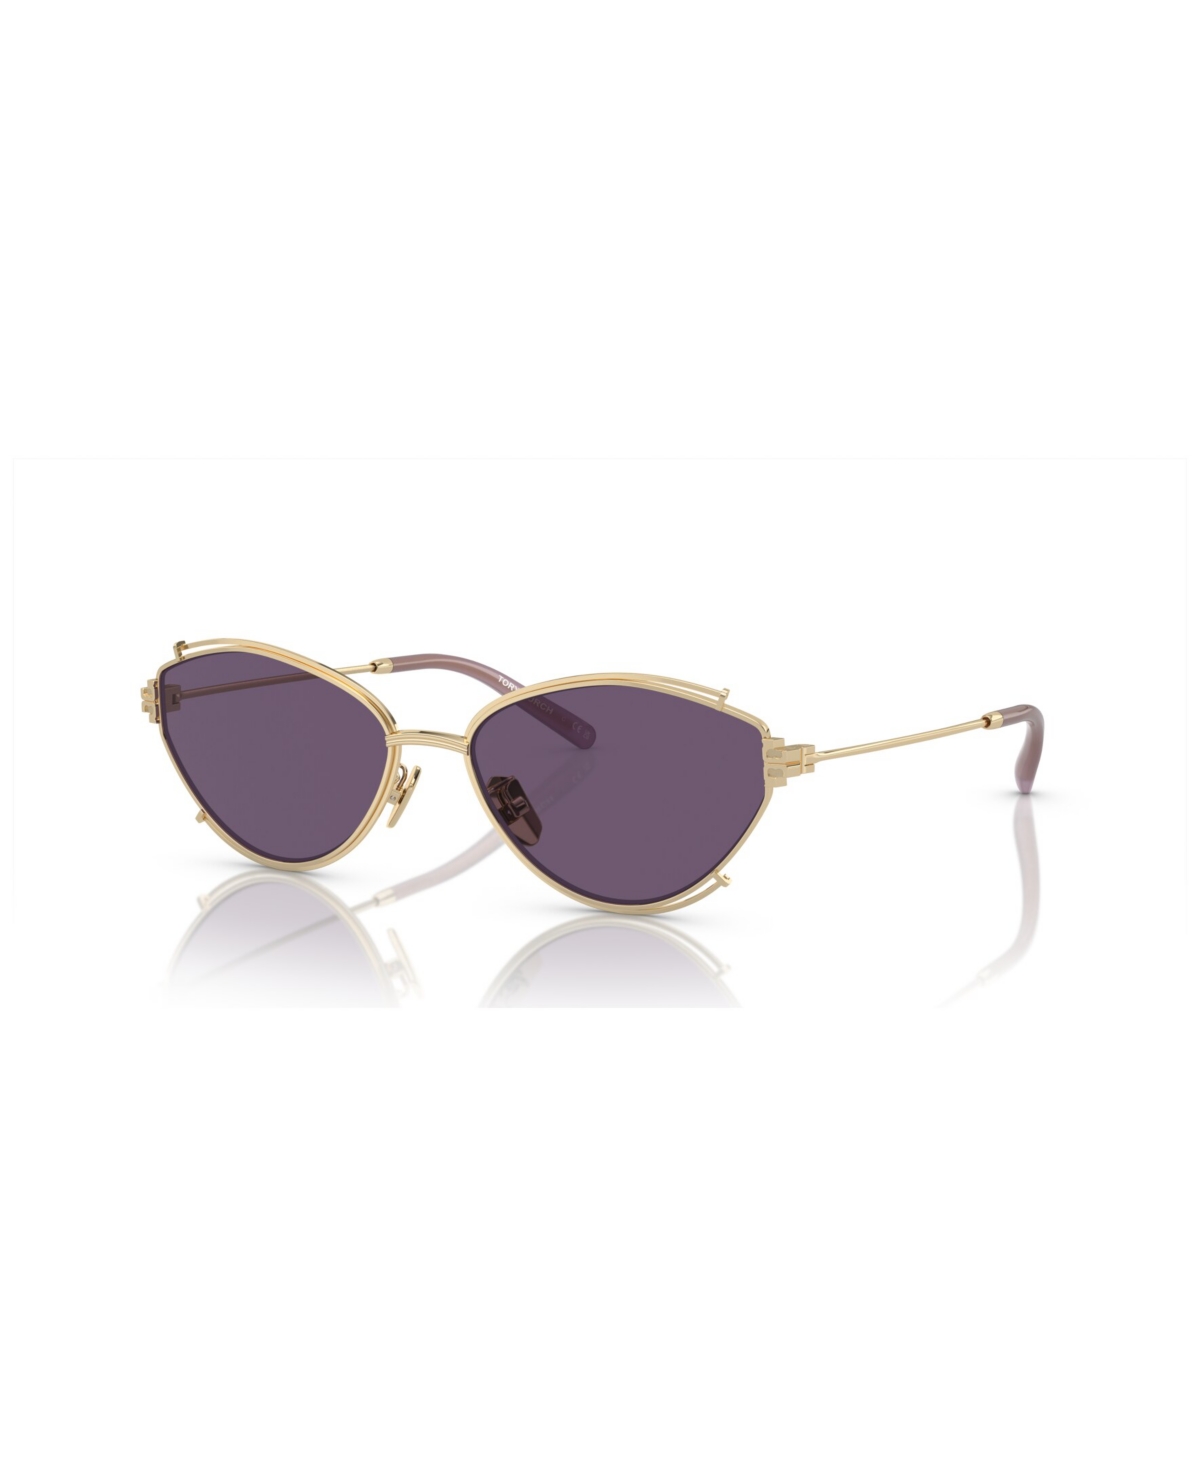 Tory Burch Women's Sunglasses Ty6103 In Shiny Light Gold